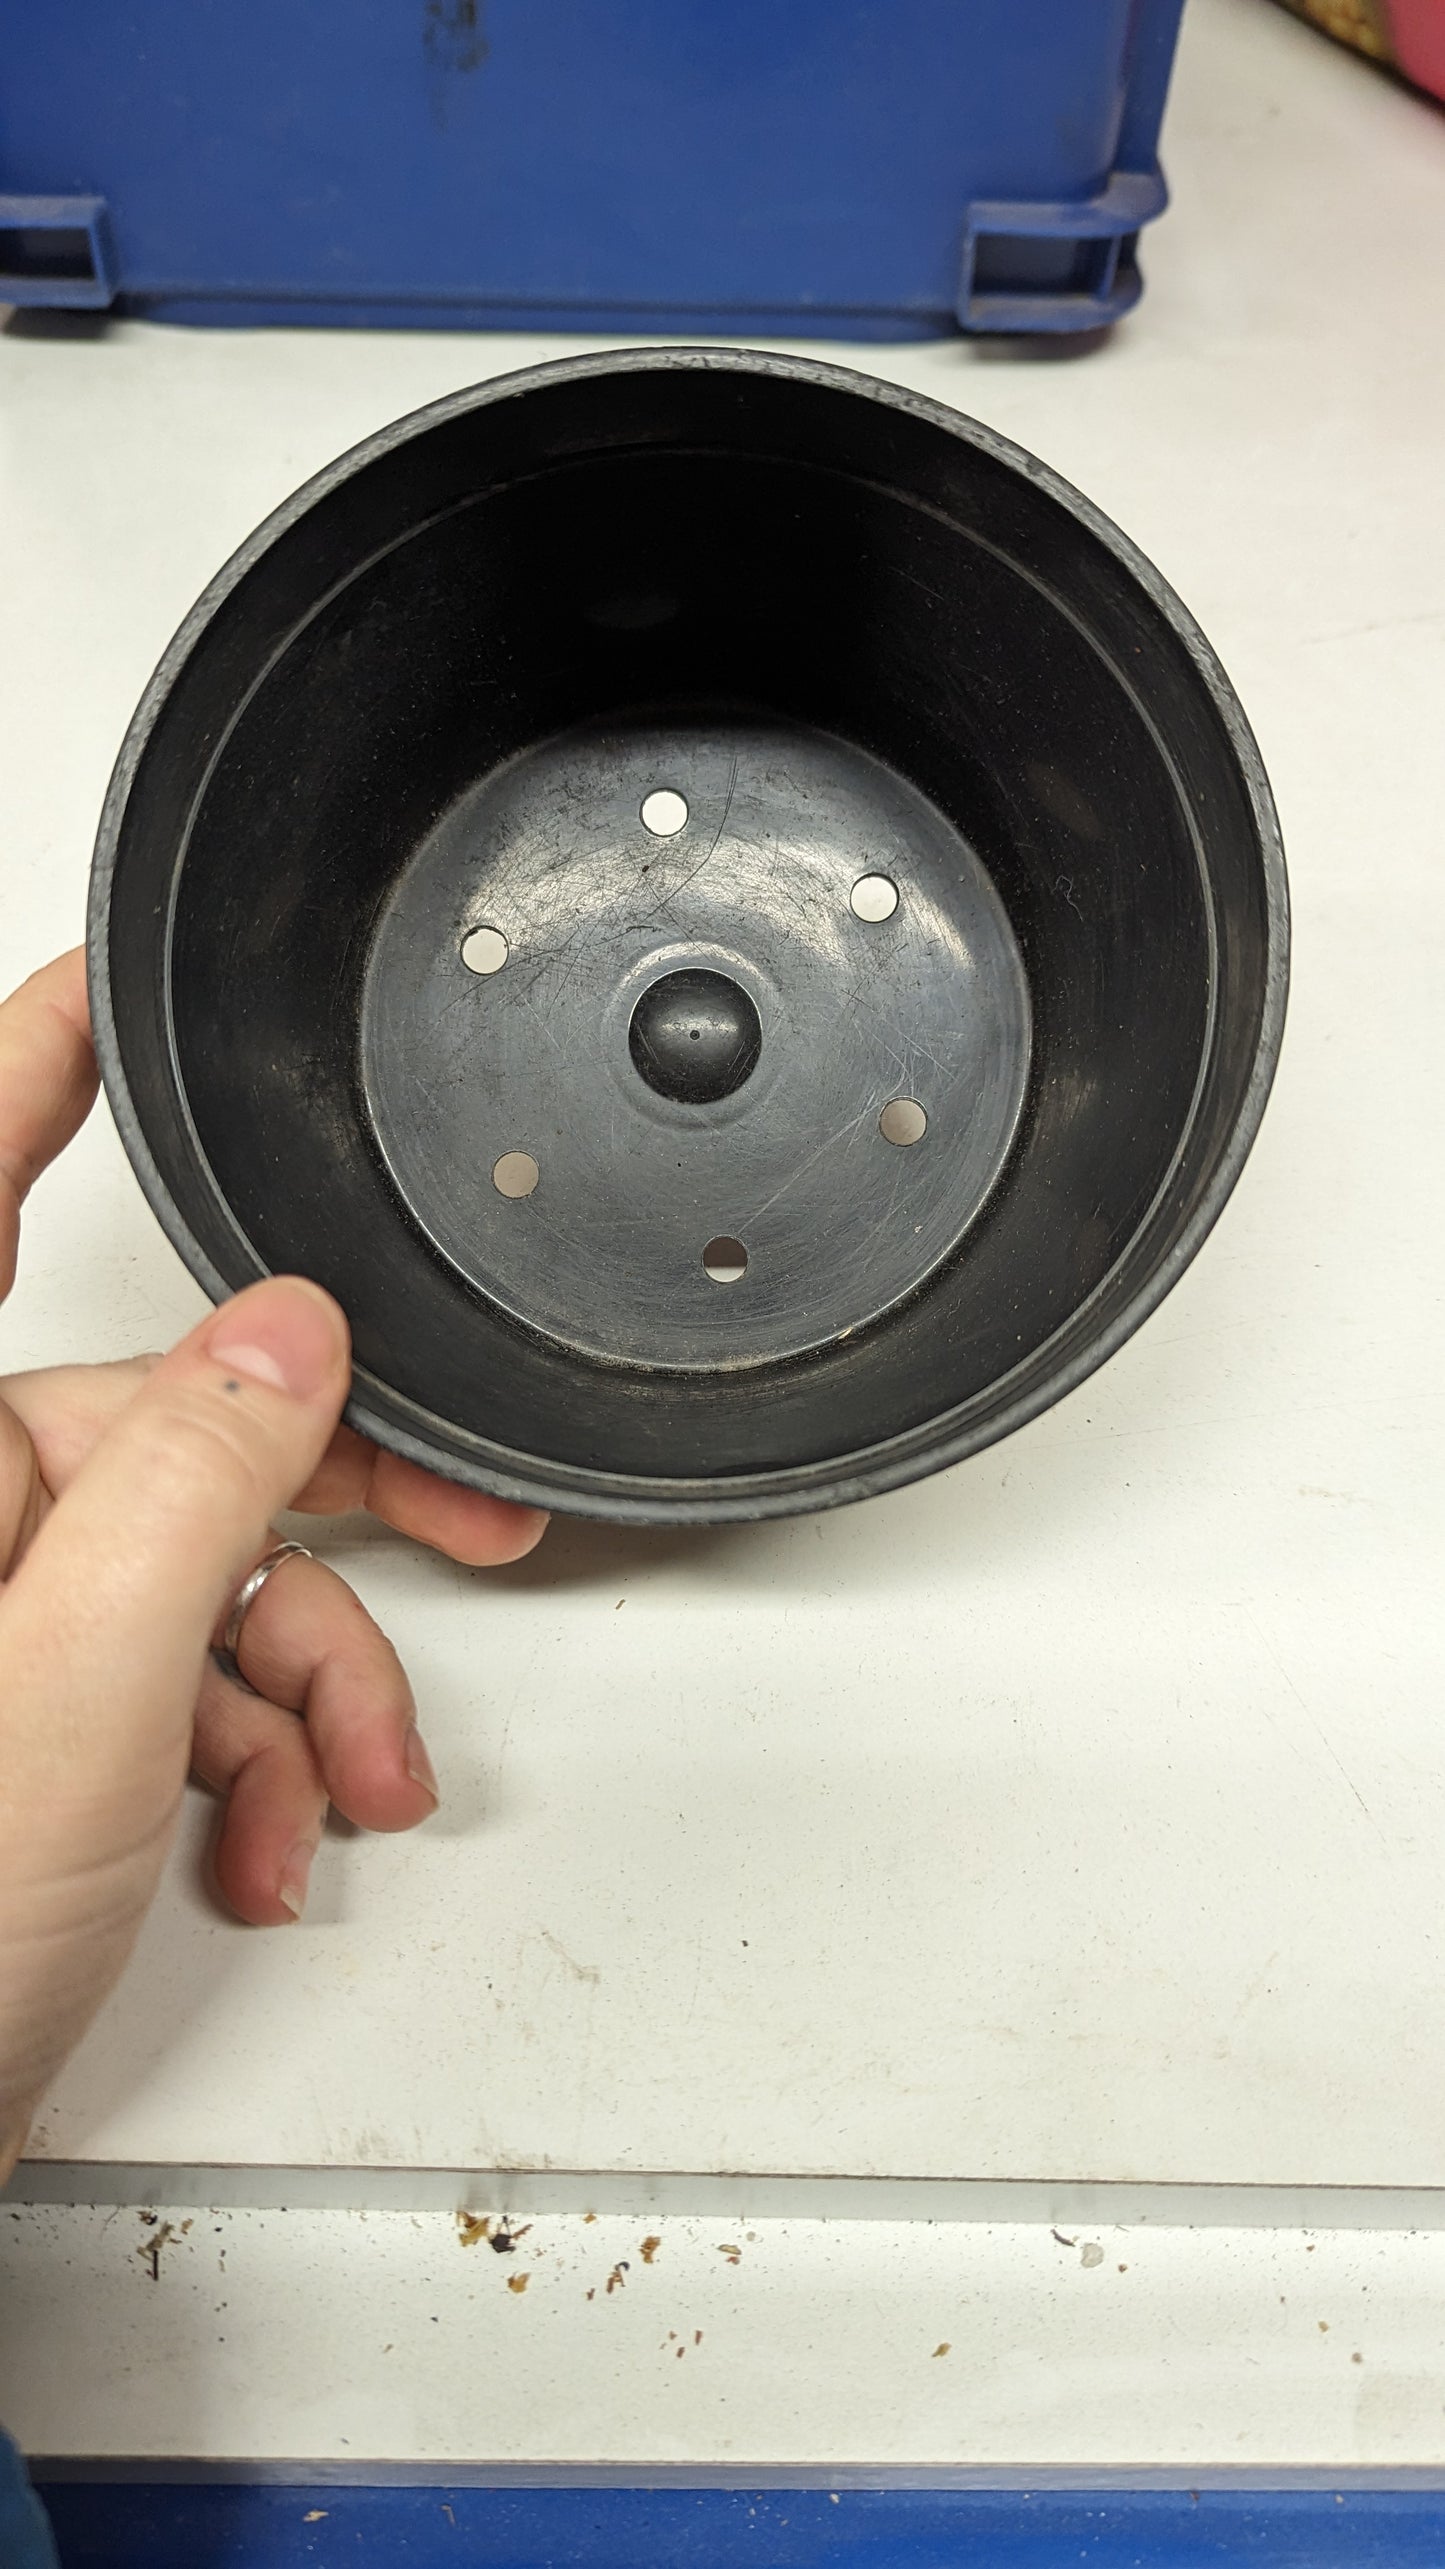 B.E.F. Growers Pot Black - 14cm (5.5 inch) Round Shallow